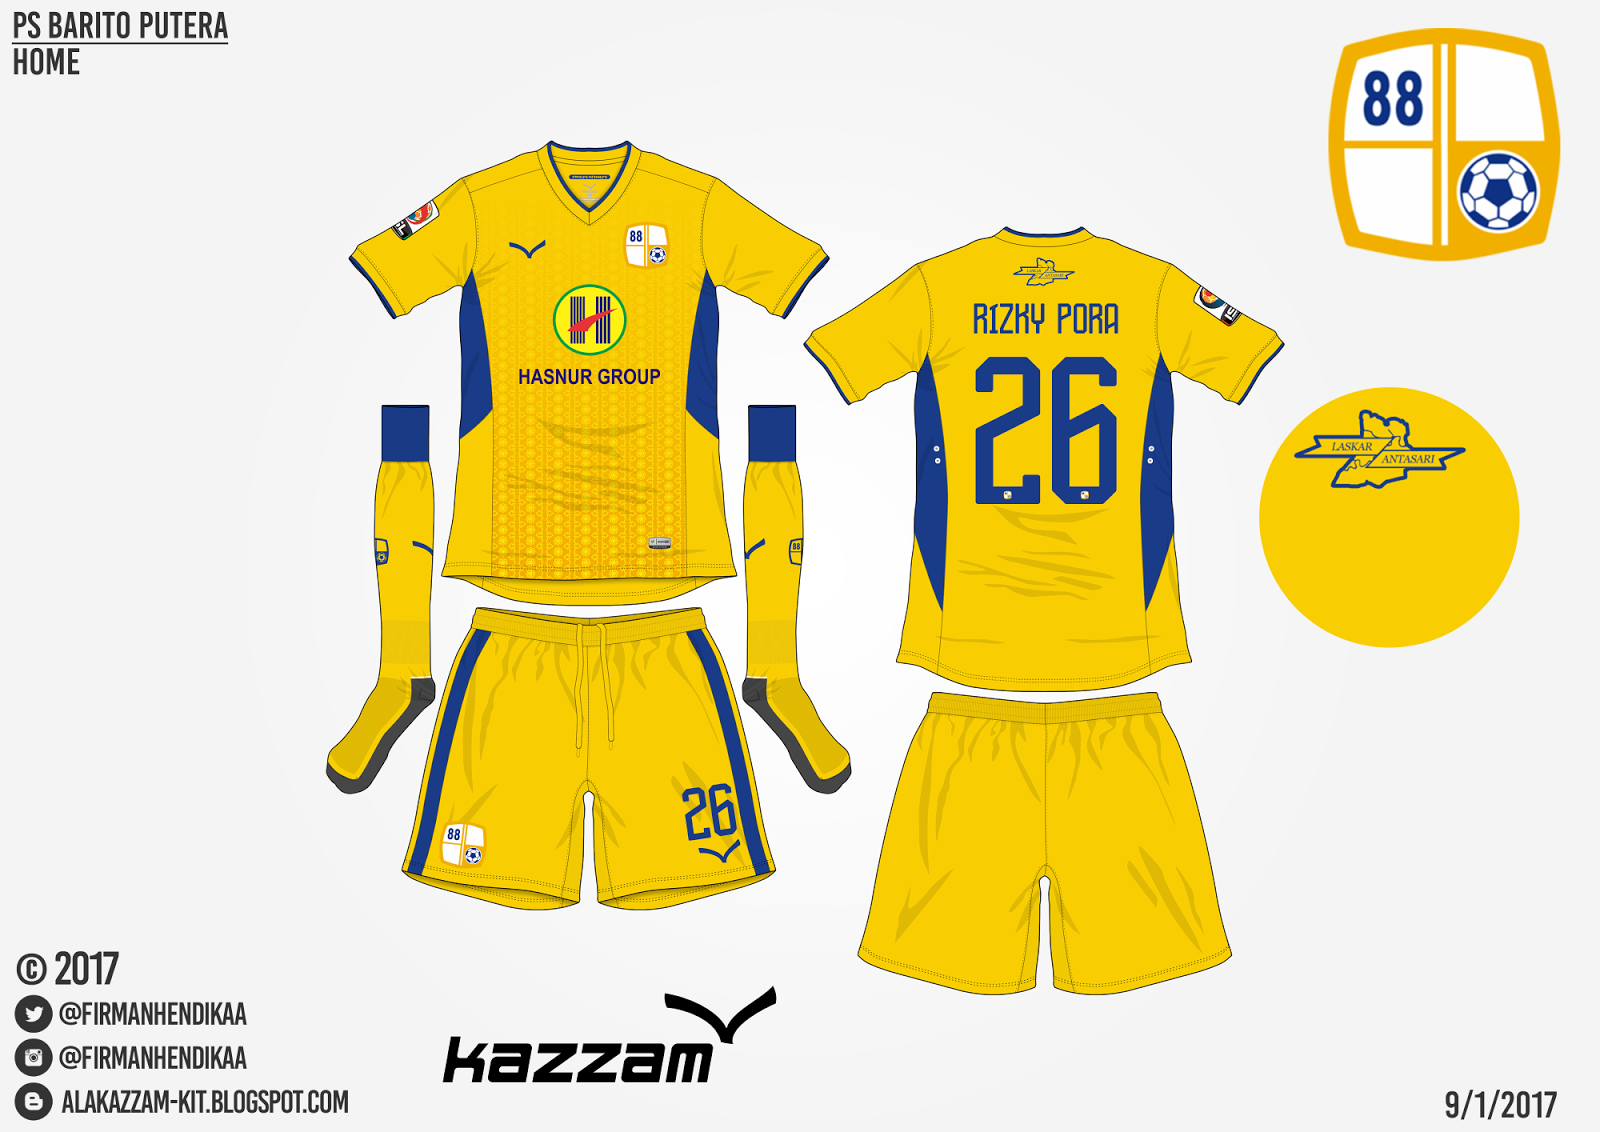 PS Barito Putera (Kazzam) | Alakazzam Kit Design